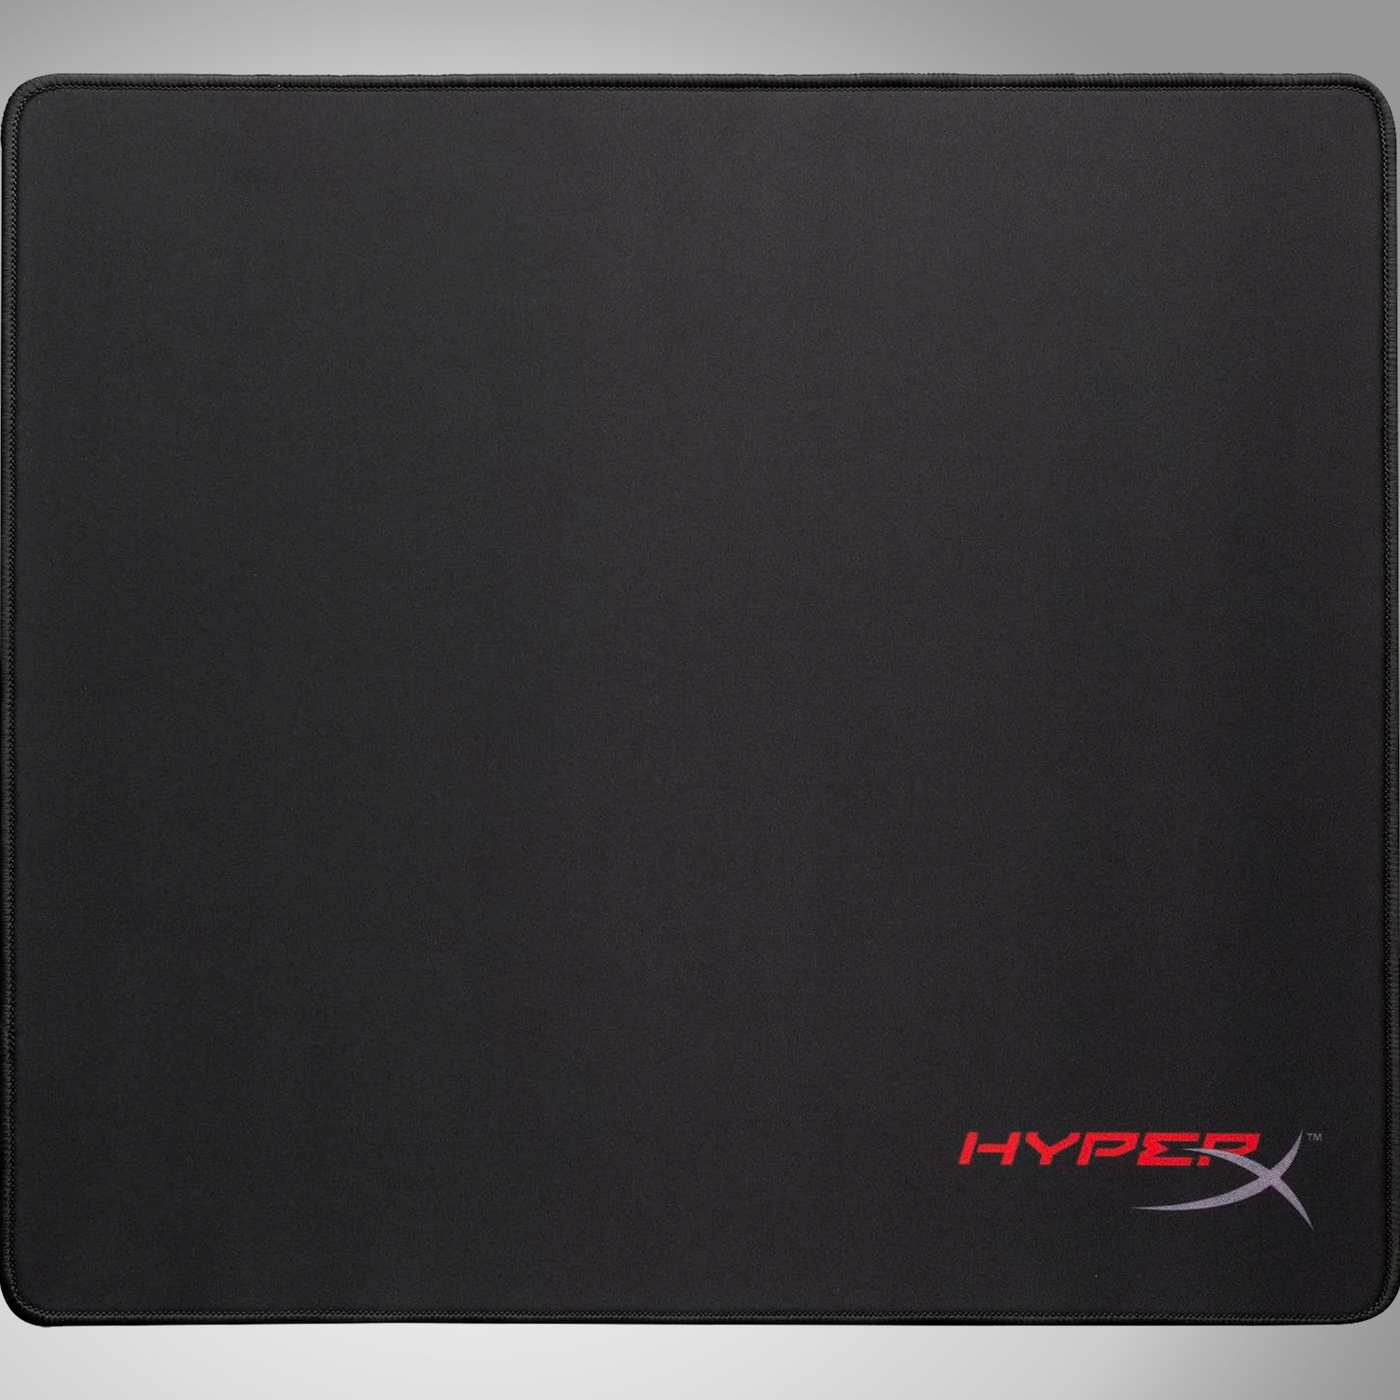 Mousepad Gamer Hyperx Fury S Pro Large Antidesgaste